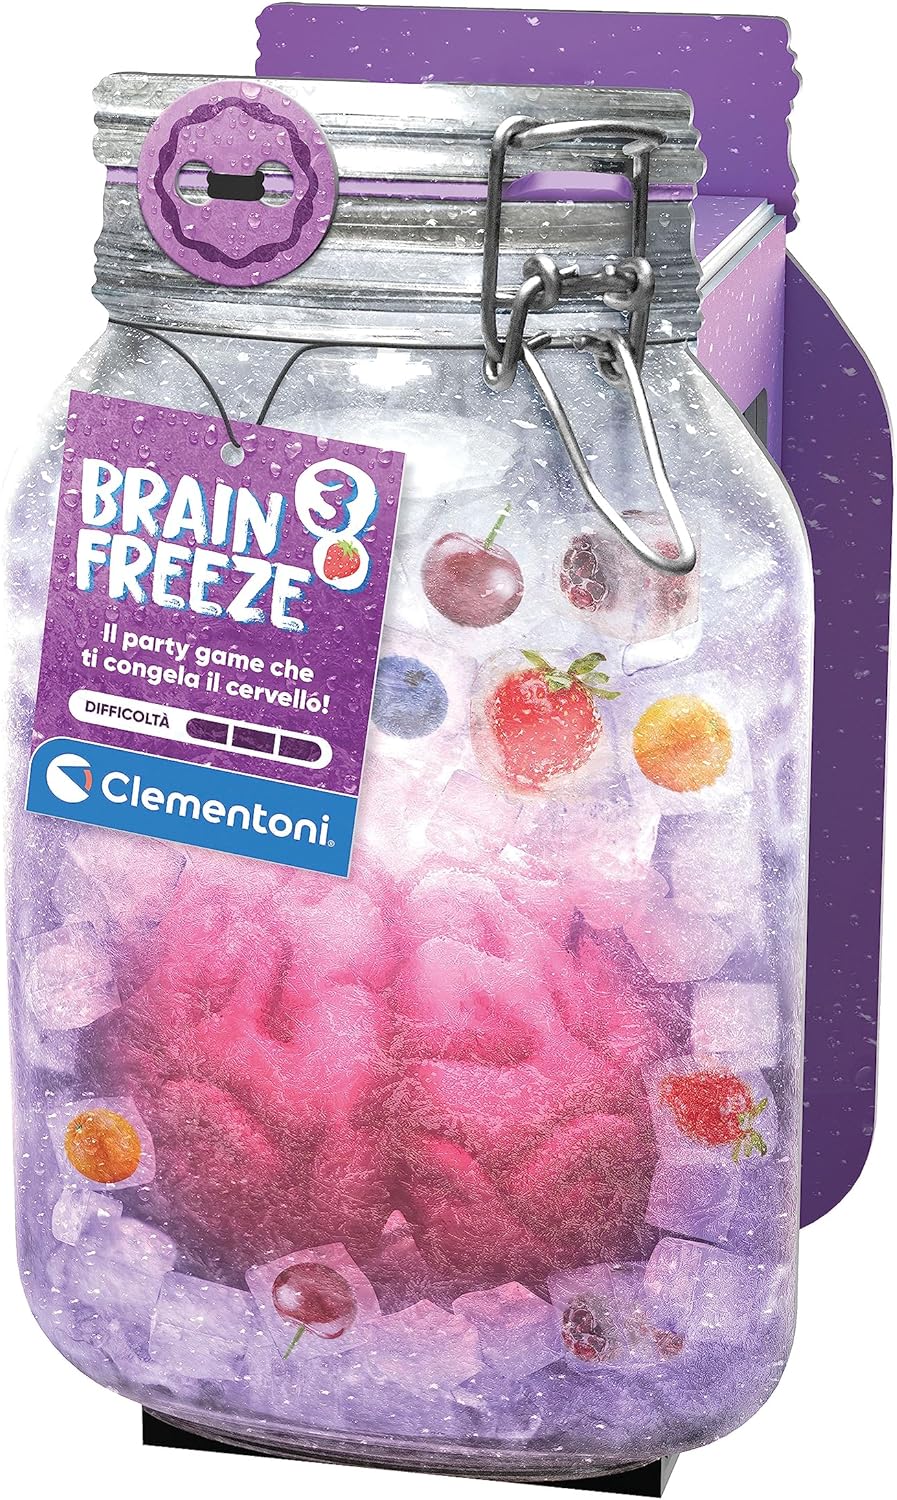 Clementoni Brain Freeze 3